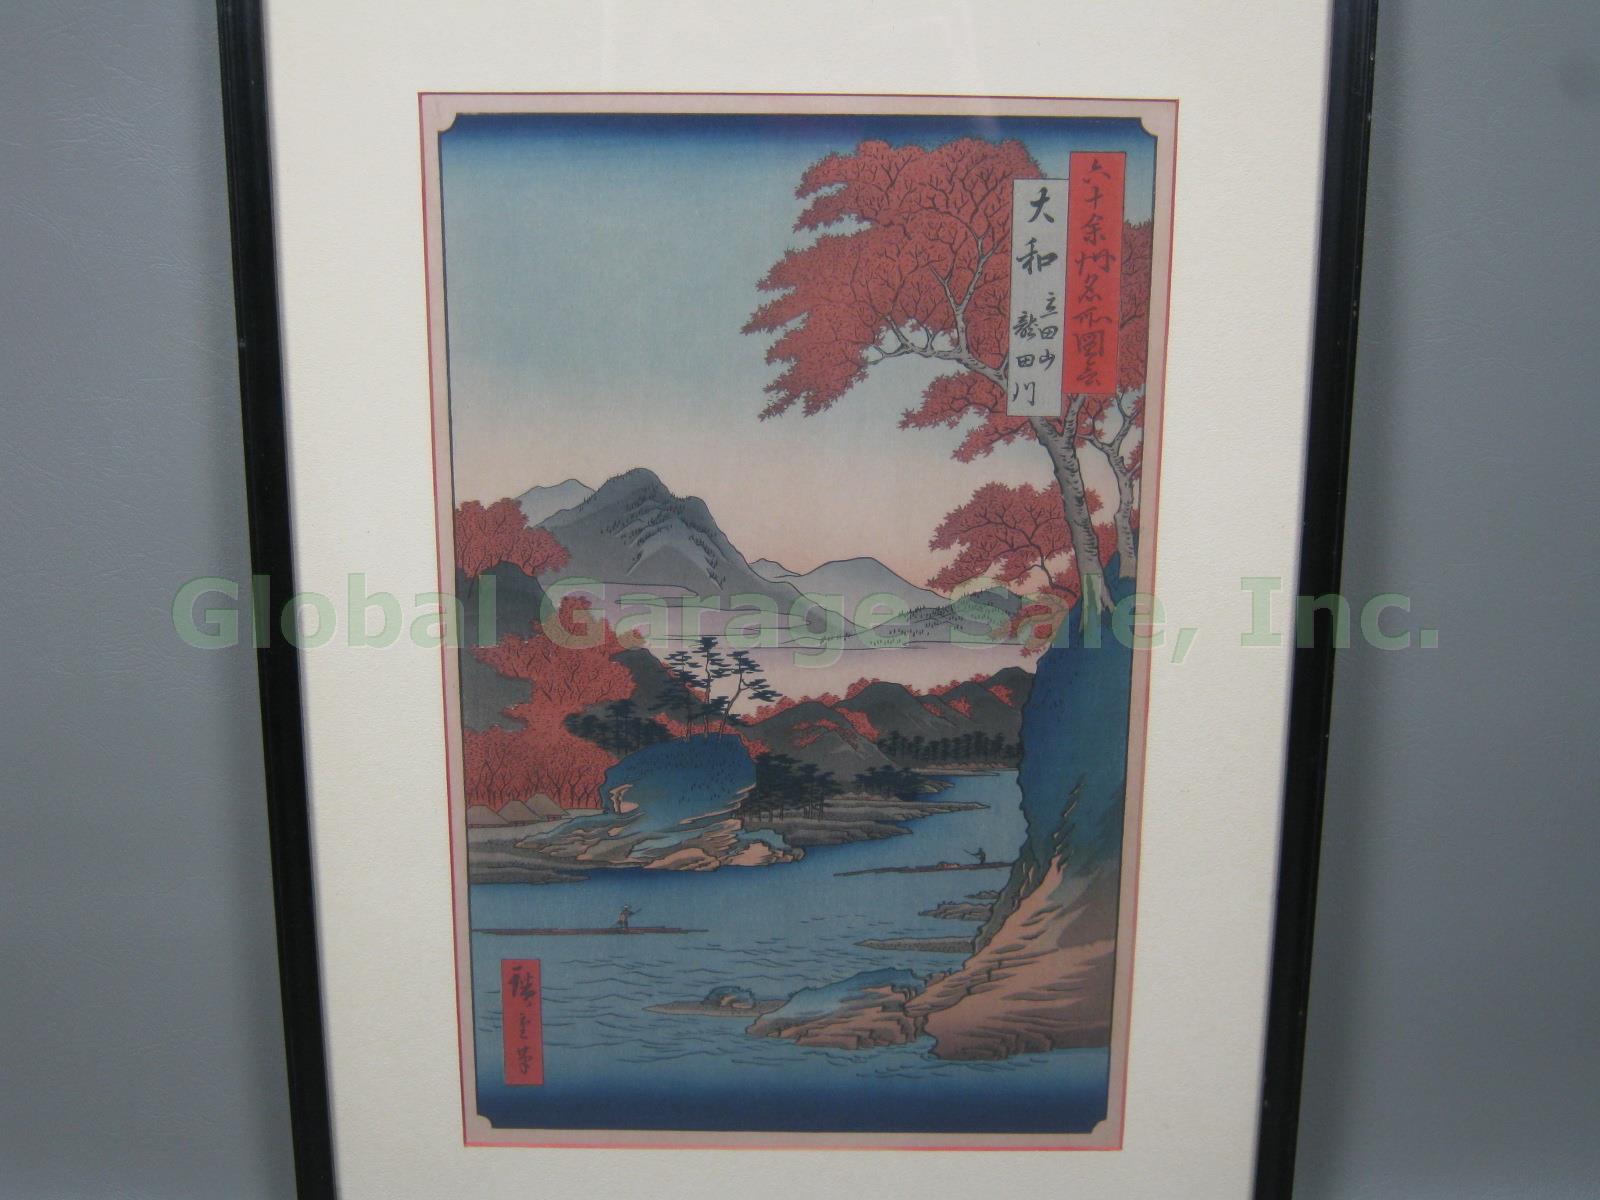 Vtg Japanese Print Tatsuta River Yamato Province Utagawa Or Ando Hiroshige Japan 1